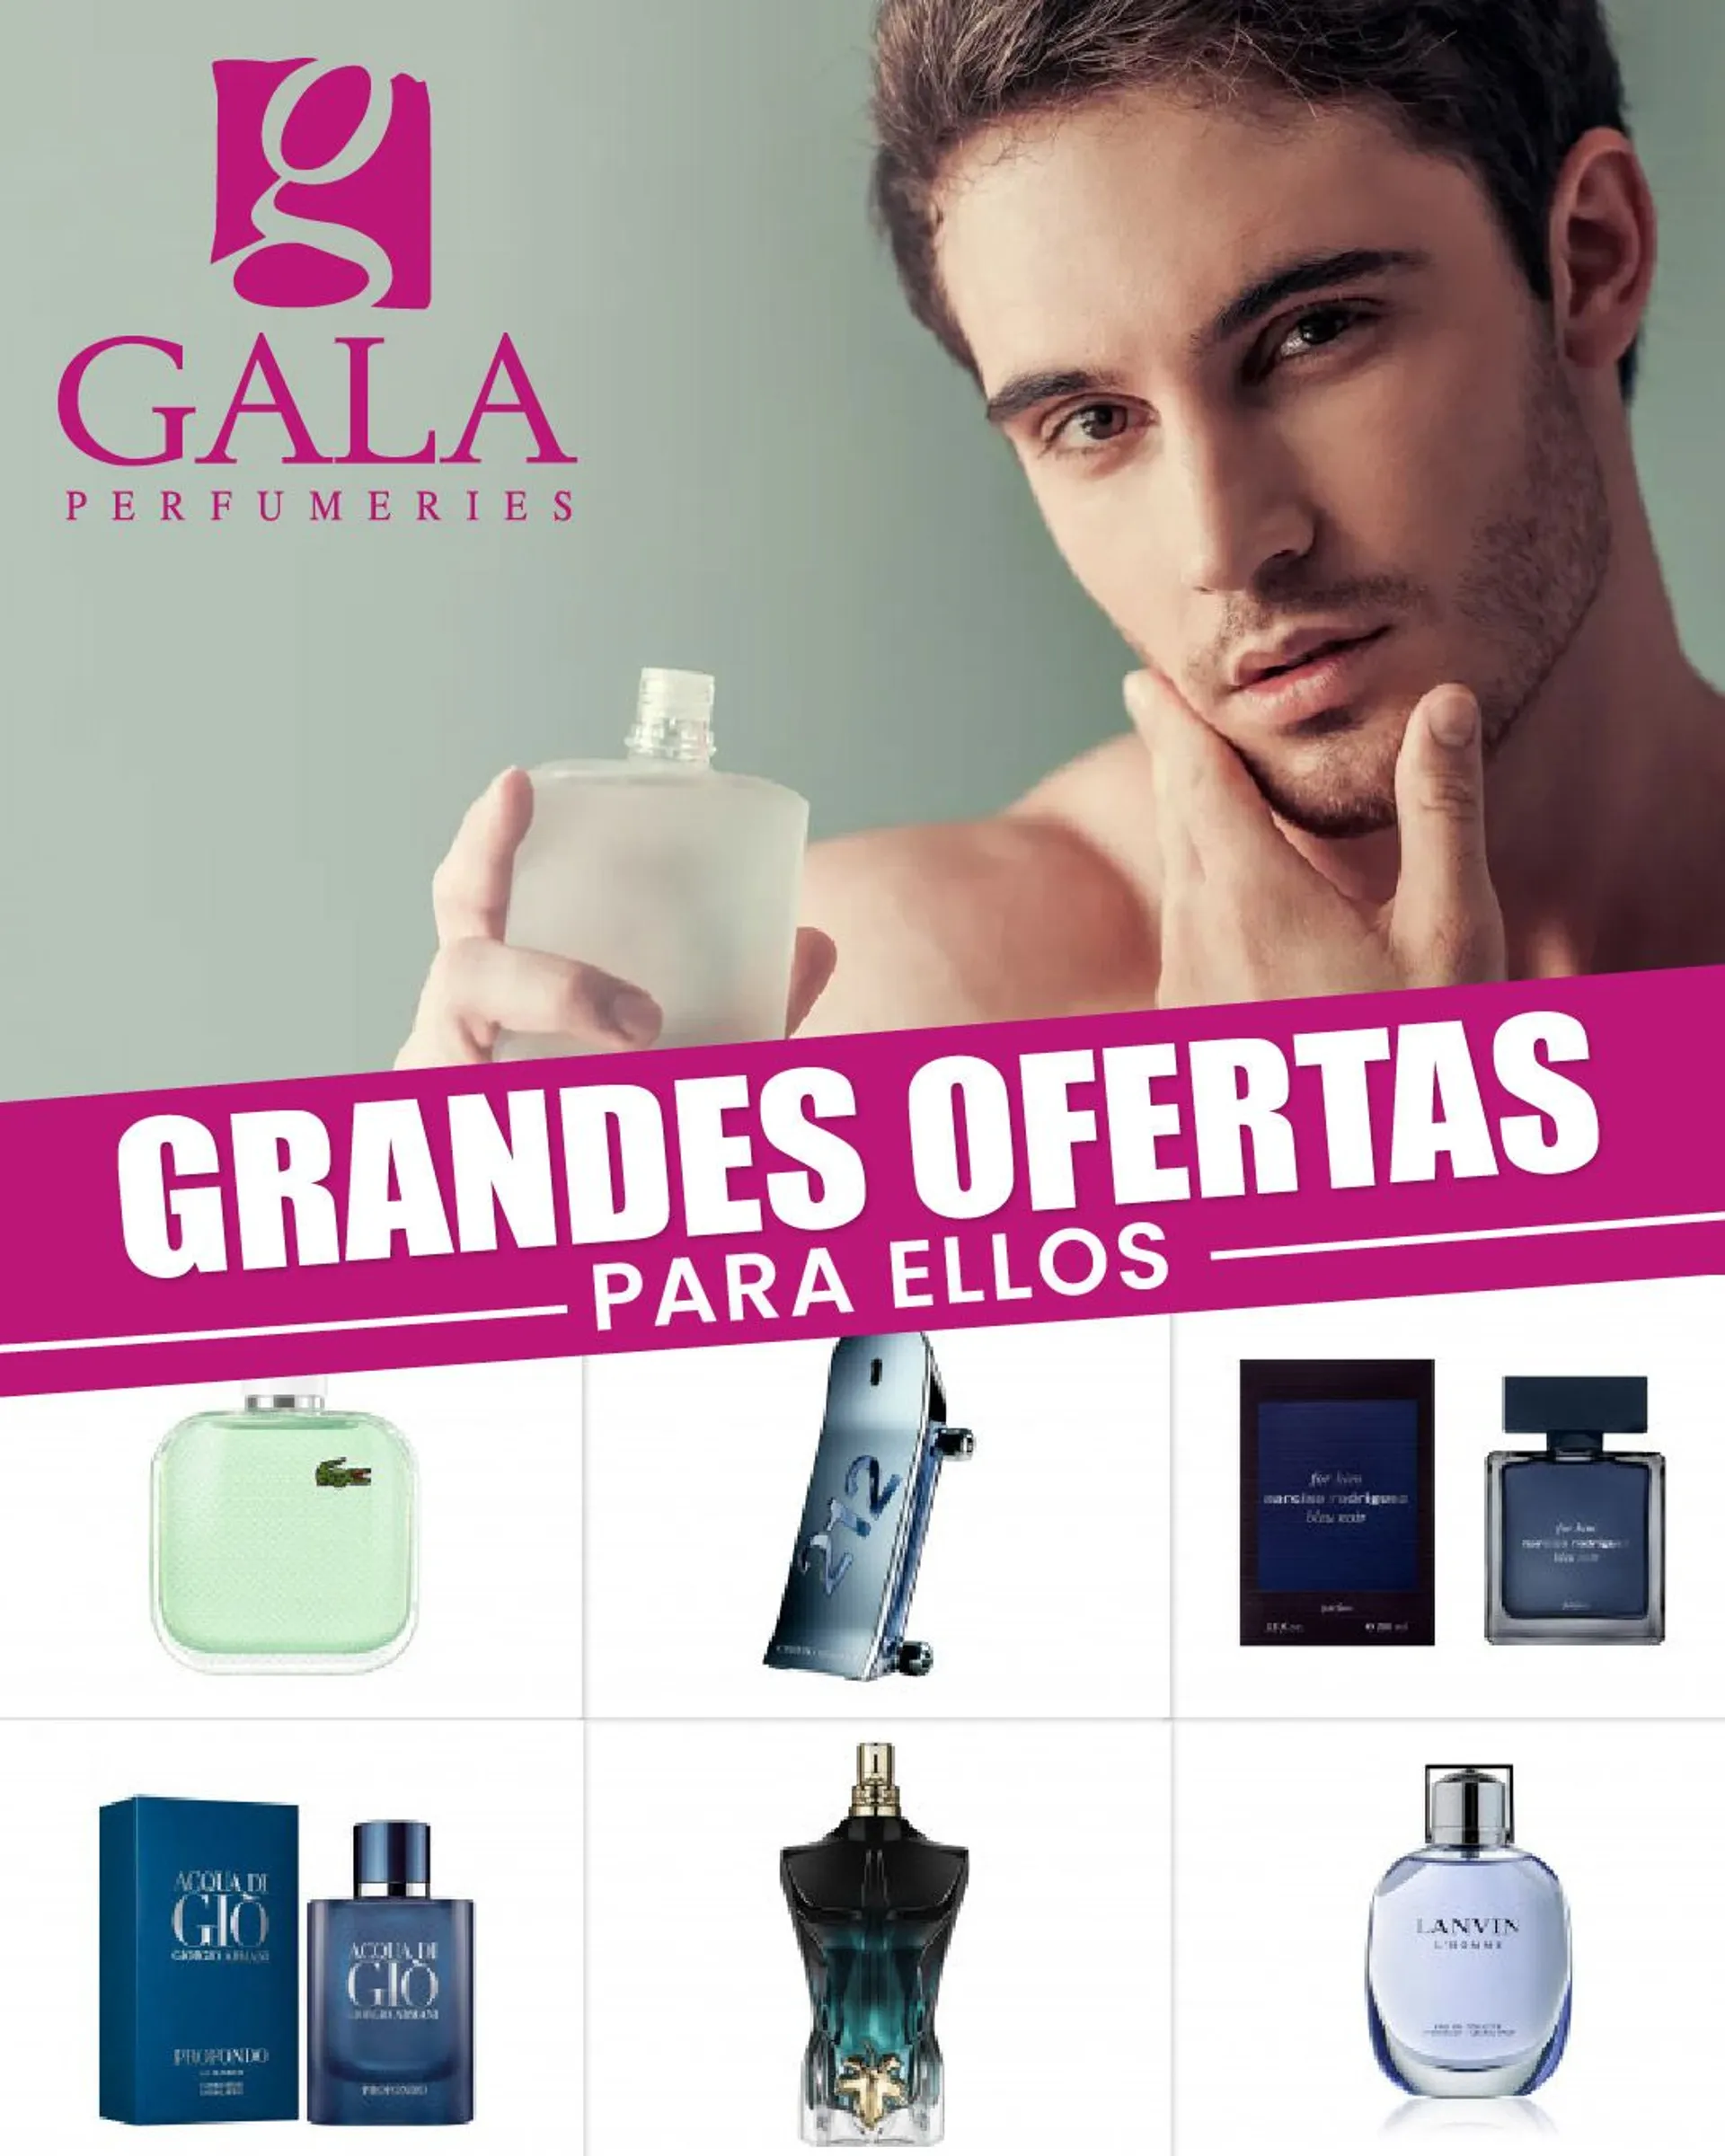 Gala Perfumeries - Hombre